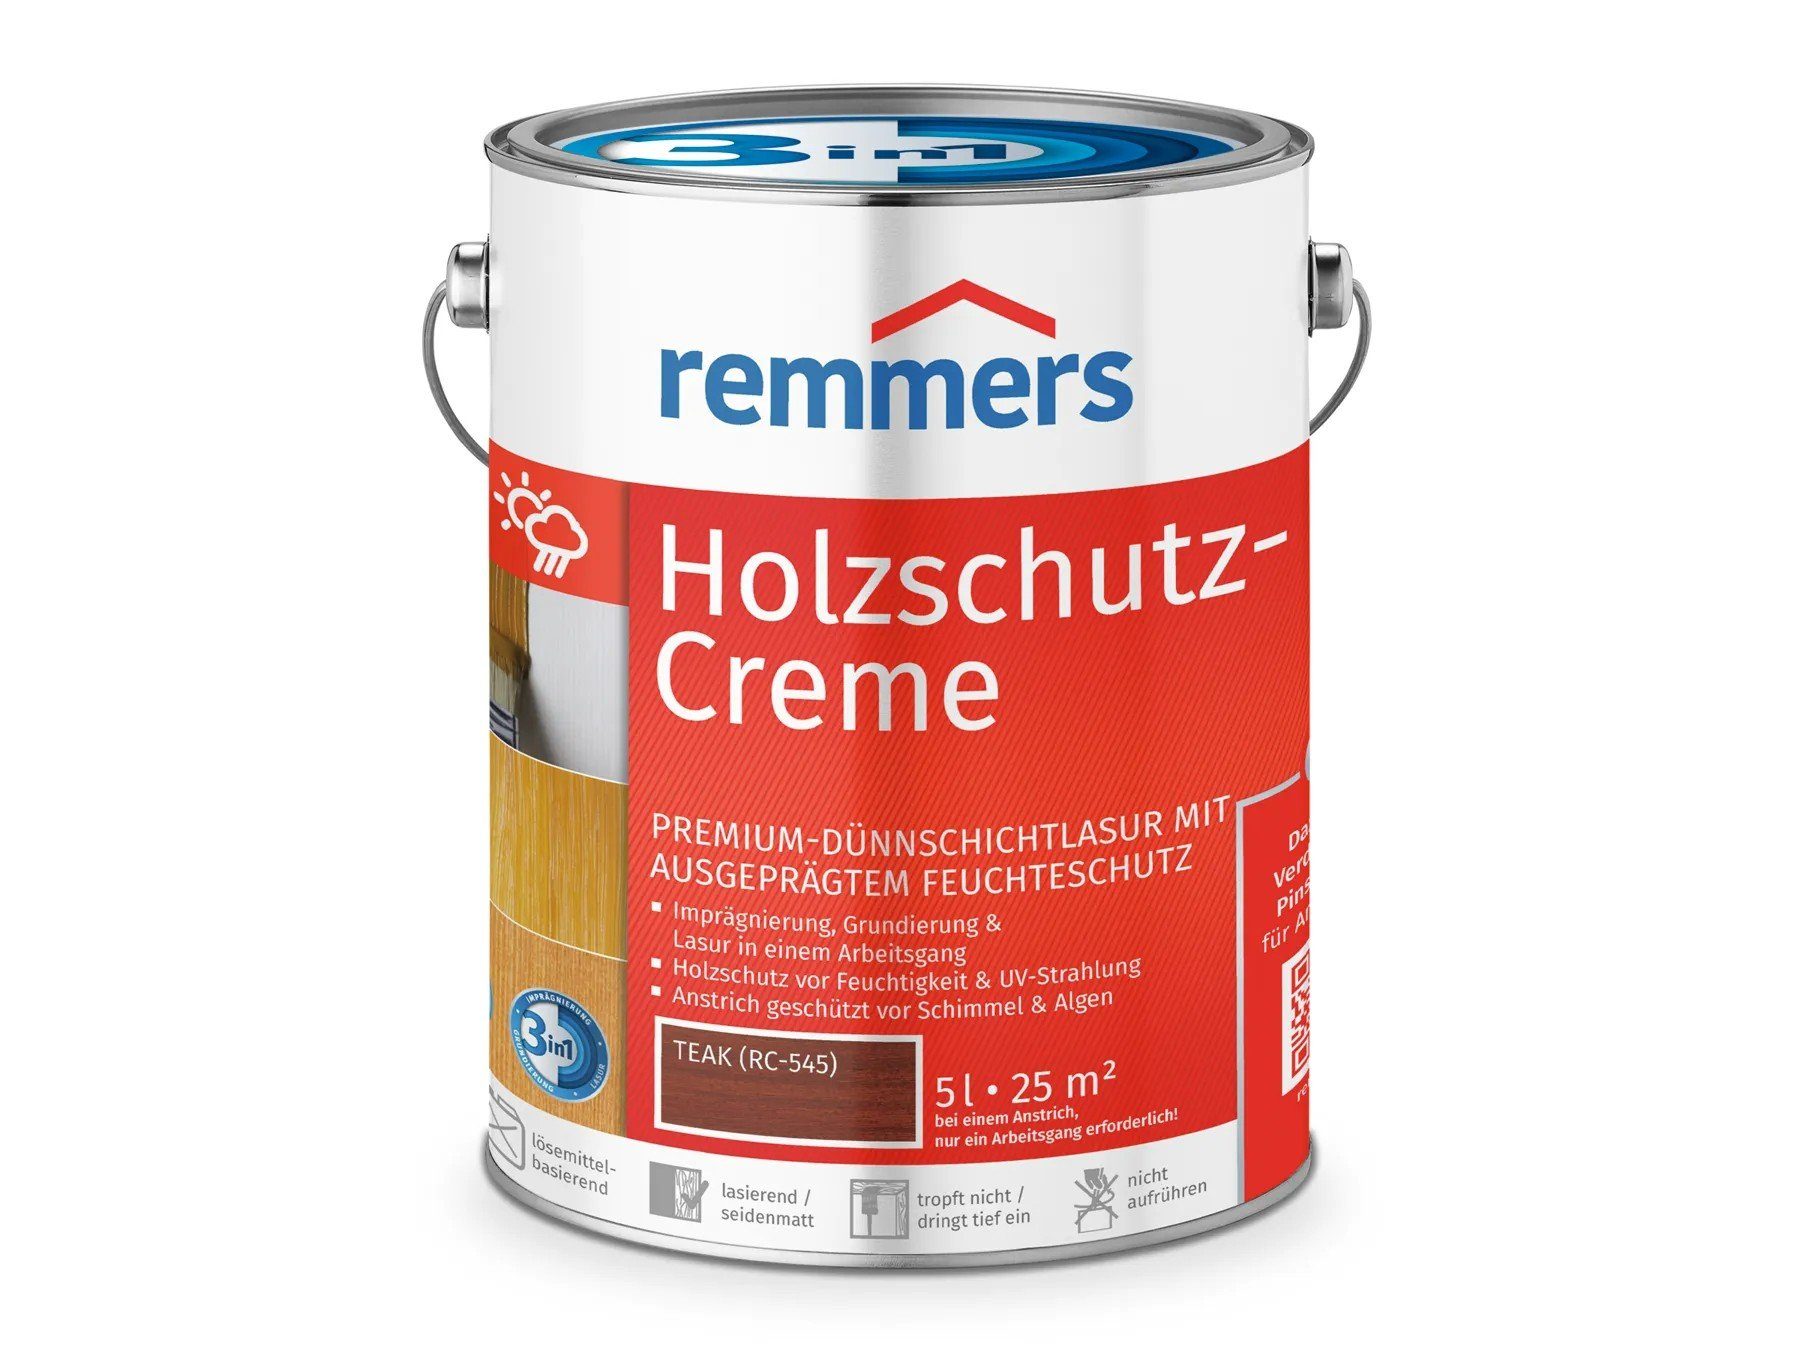 Remmers Holzschutzlasur Holzschutz-Creme 3in1 teak (RC-545)